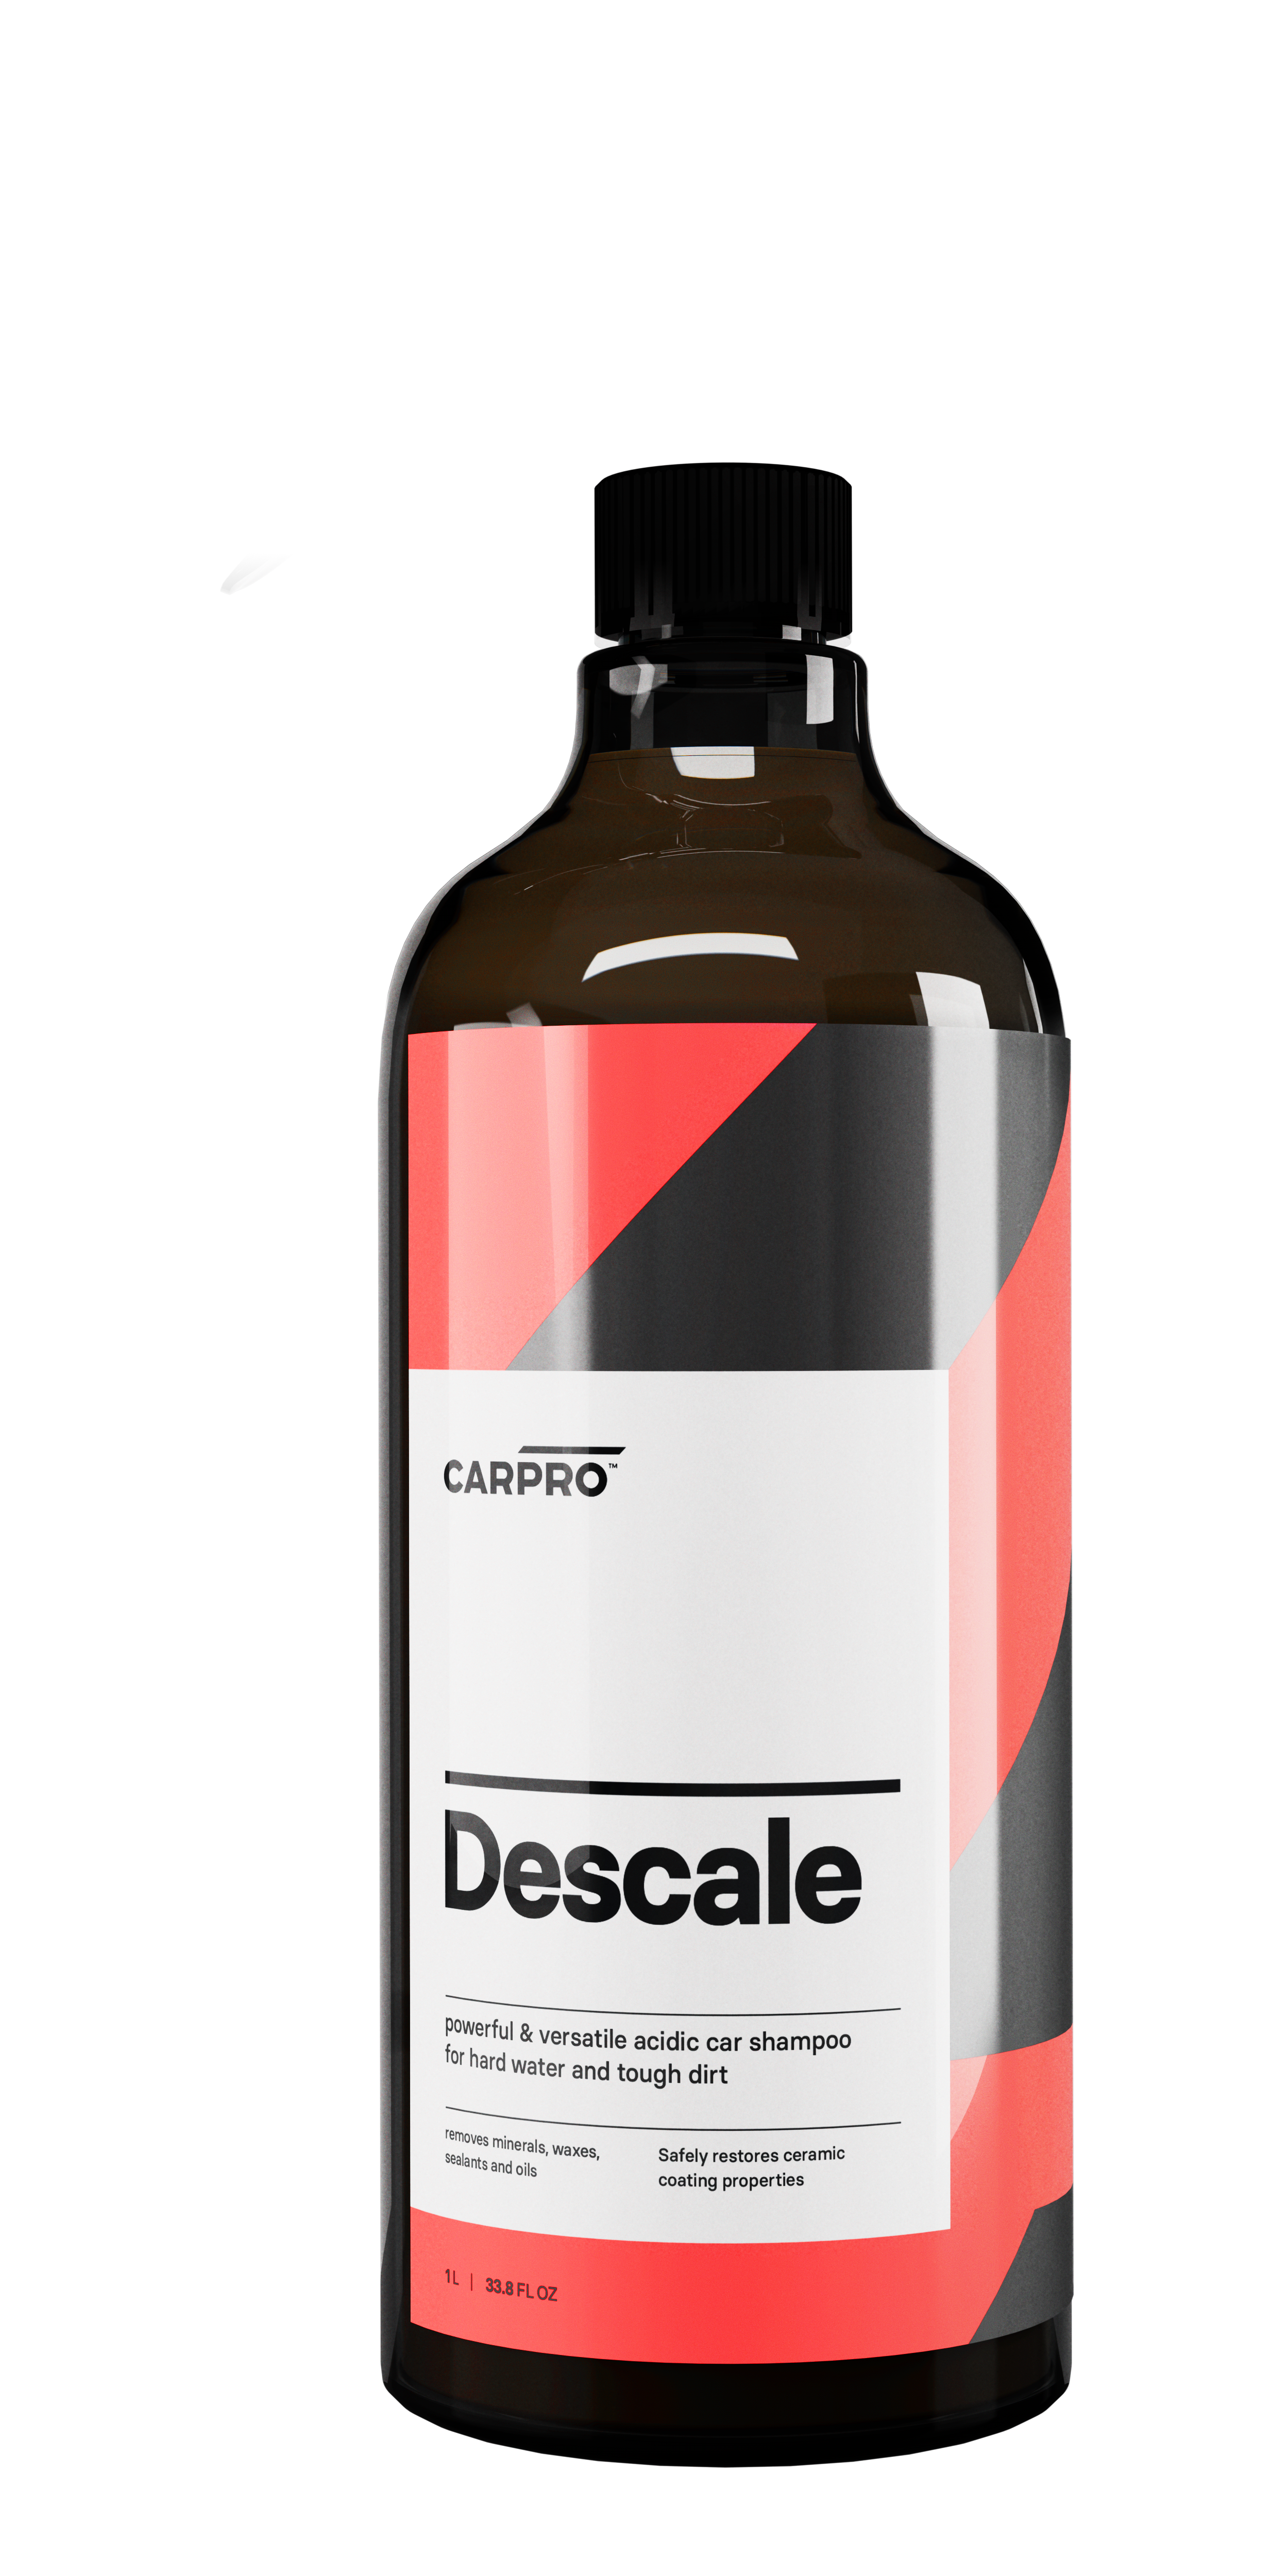 CARPRO Descale 1L - Acid pH Car Shampoo